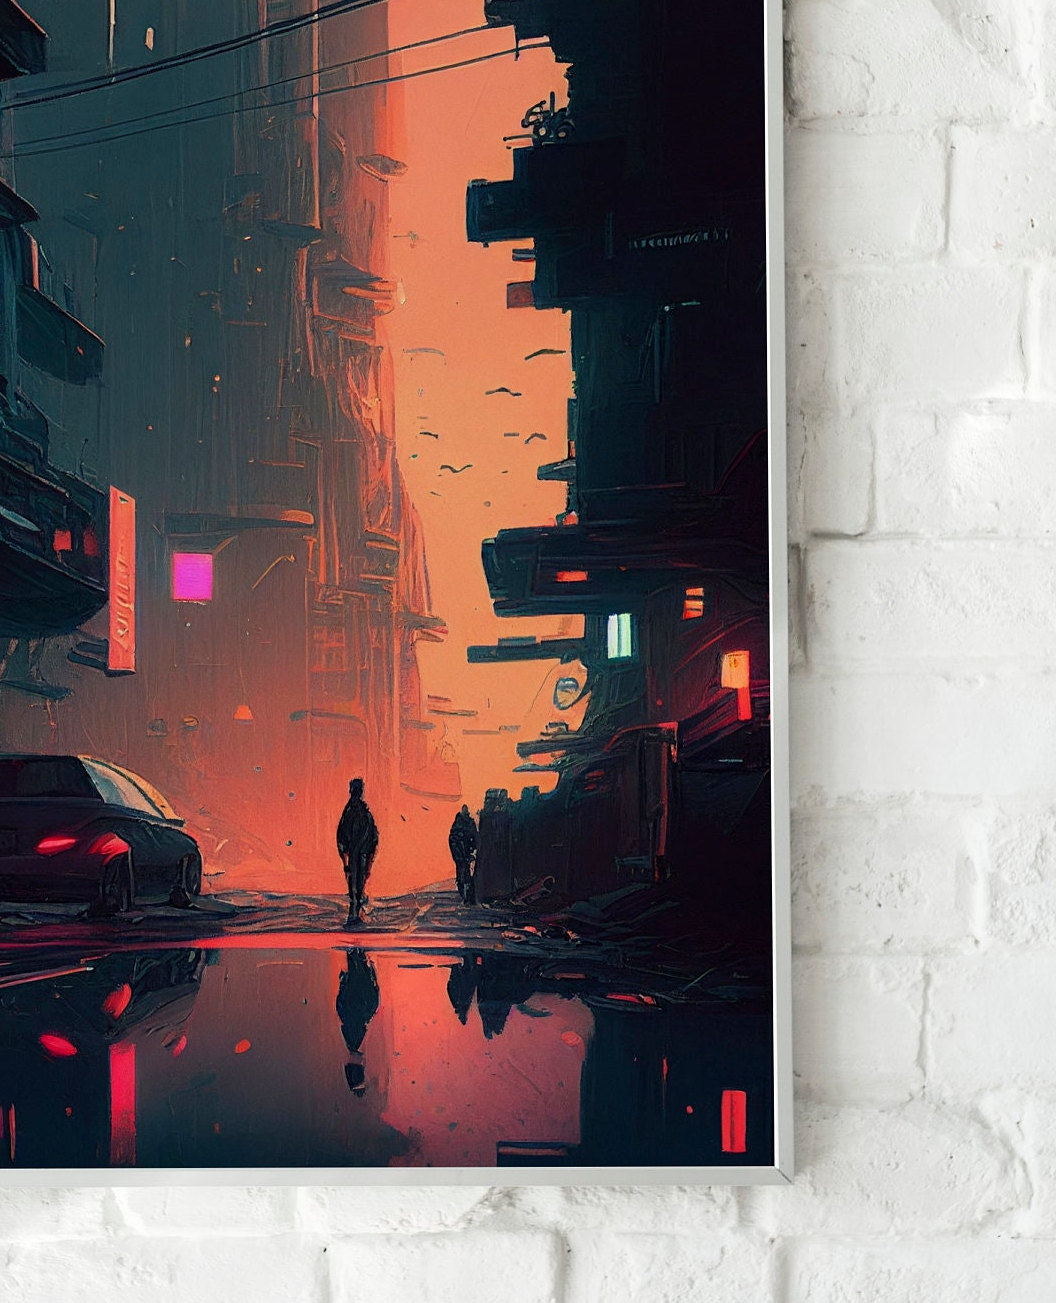 Digital Cyberpunk City Neon Poster Print